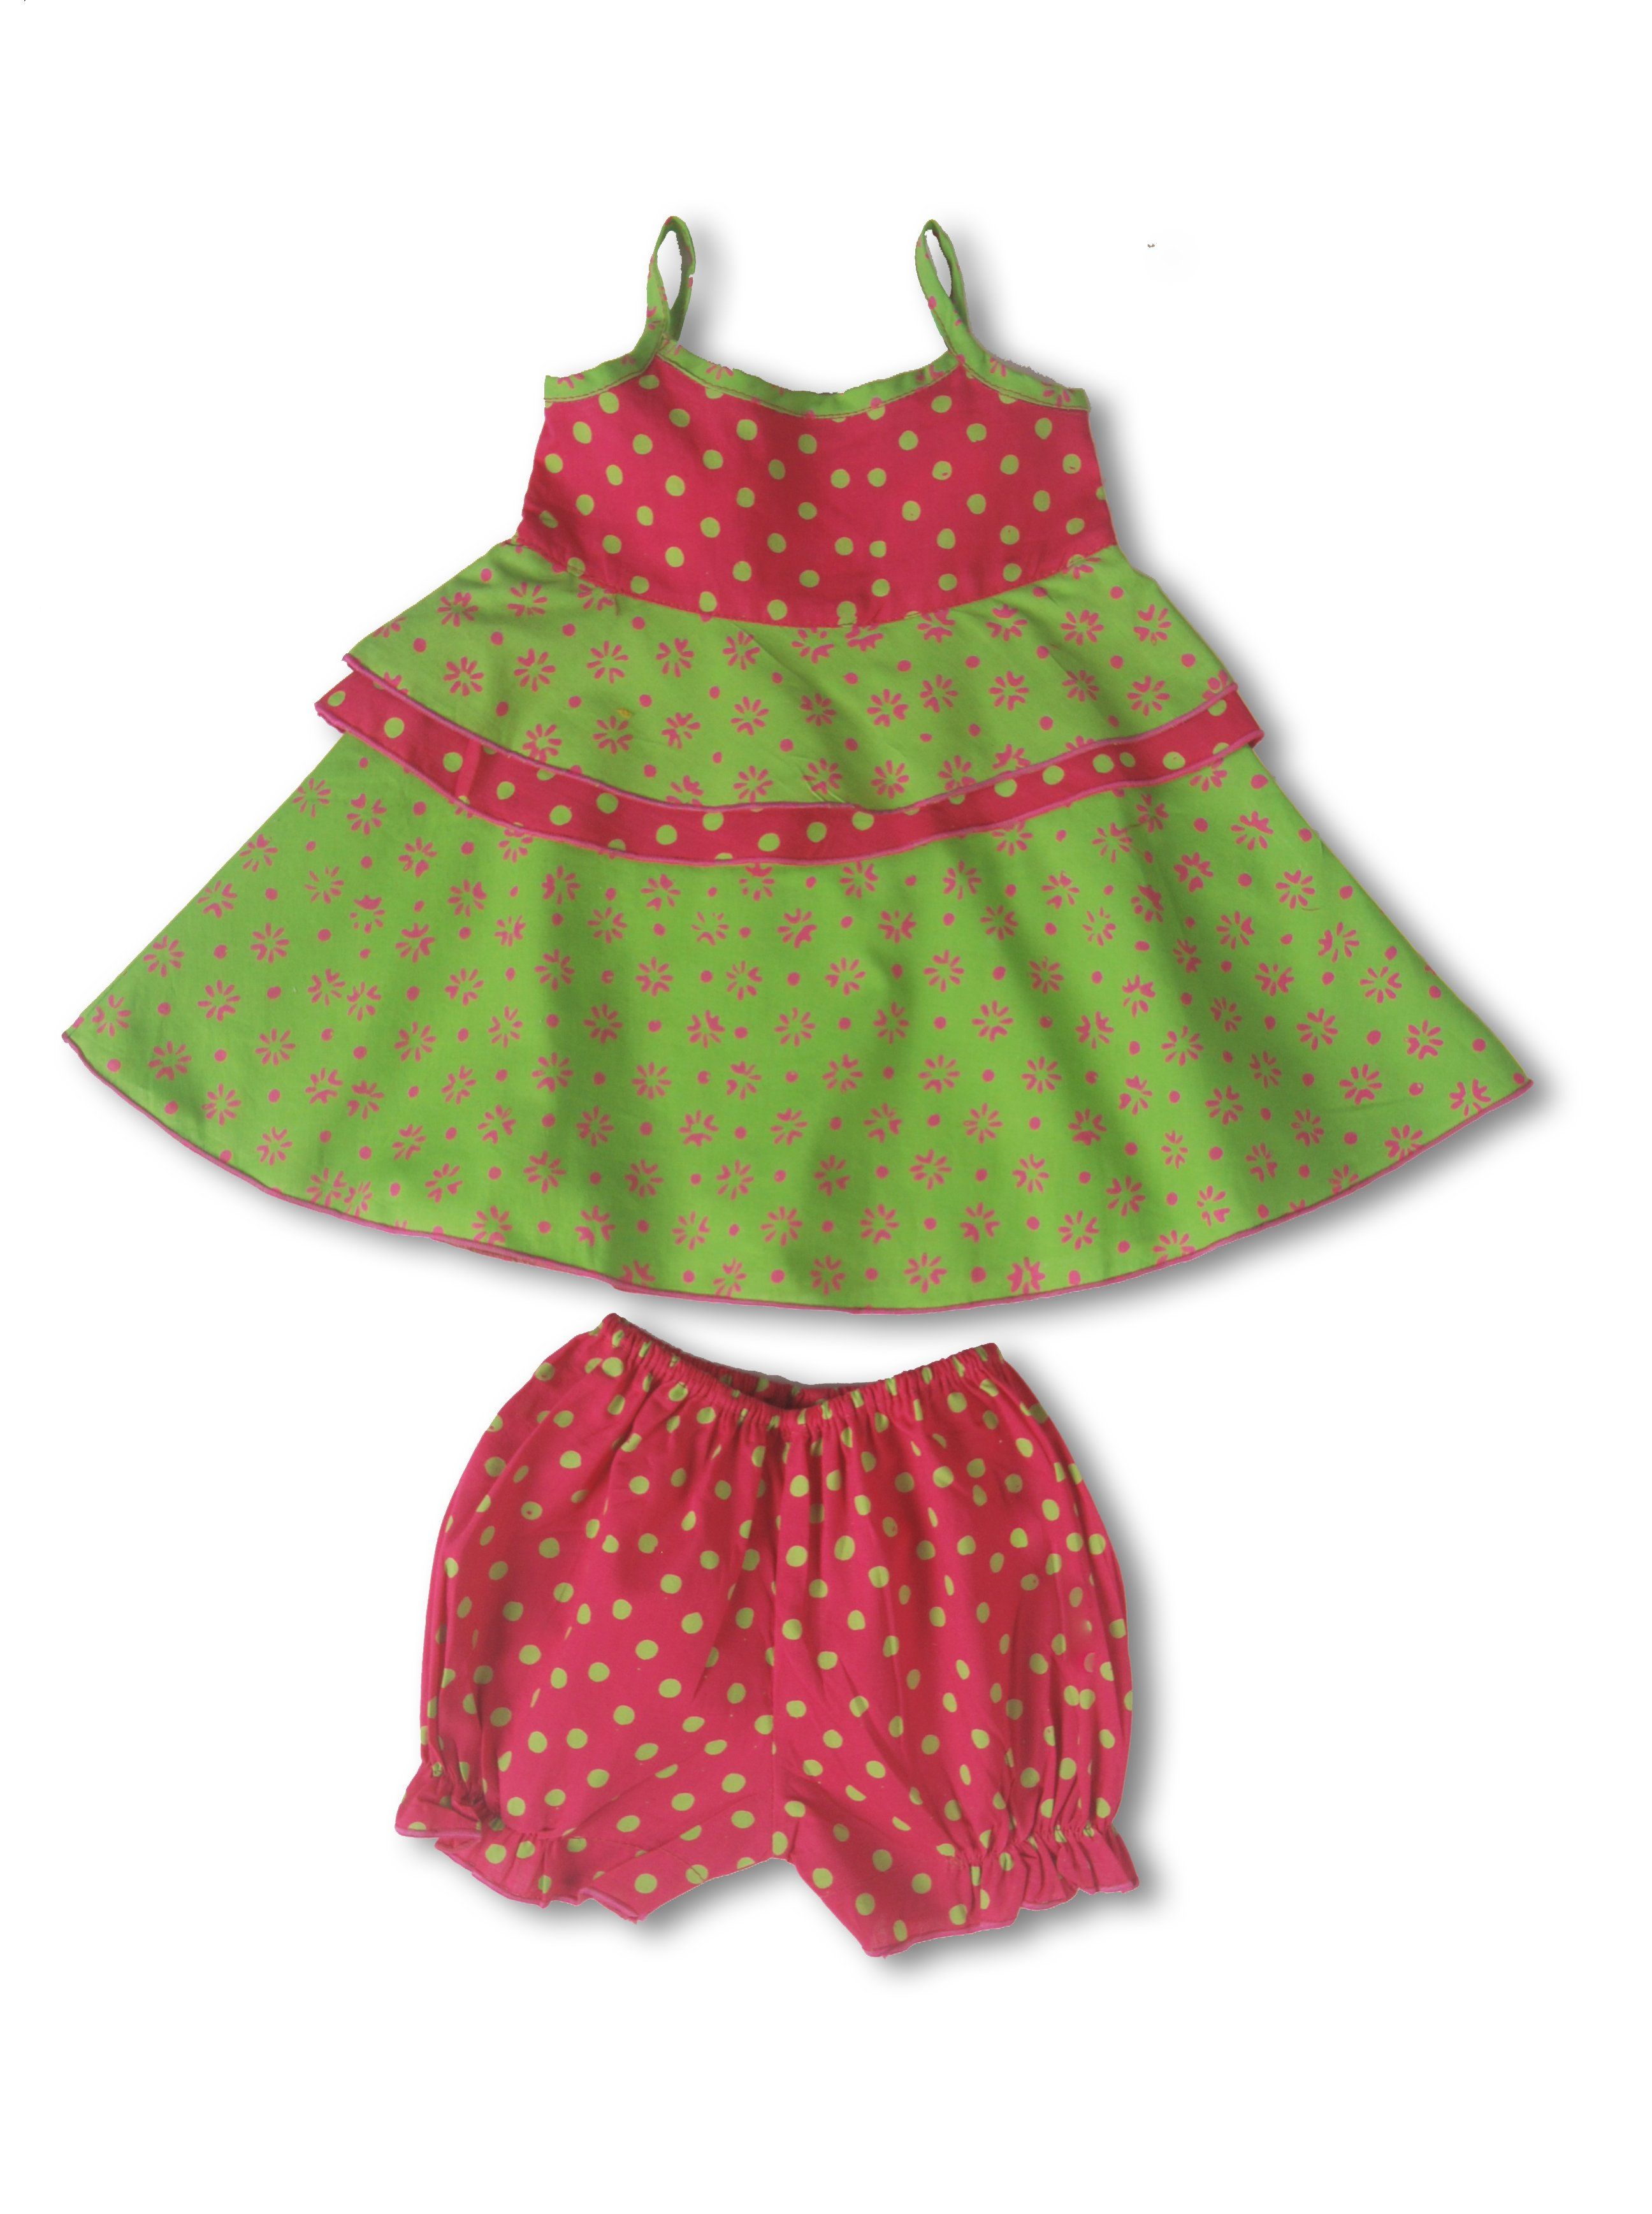 Infant Mannequin Dress Form For Merchandising Kids Clothing Subastral